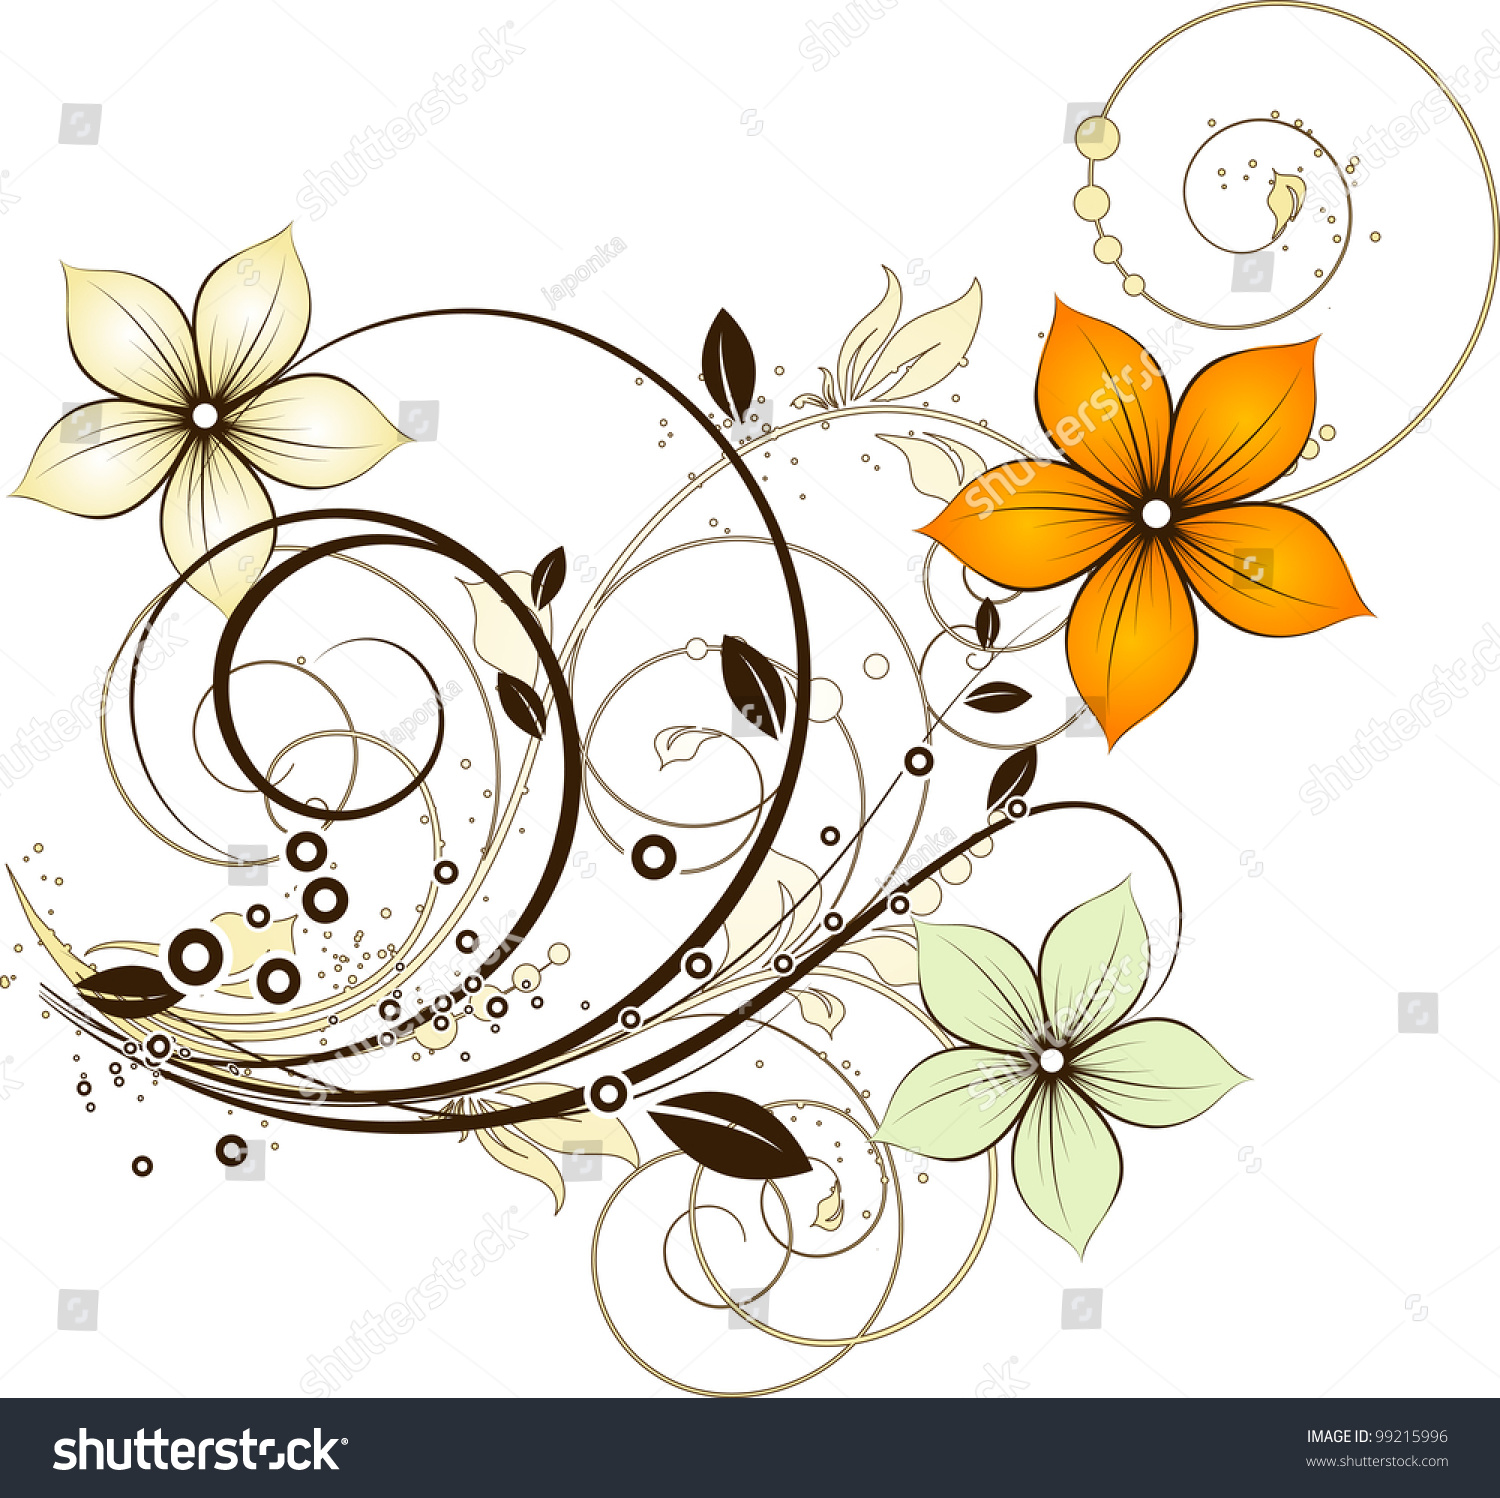 Abstract Floral Illustration For Design. - 99215996 : Shutterstock